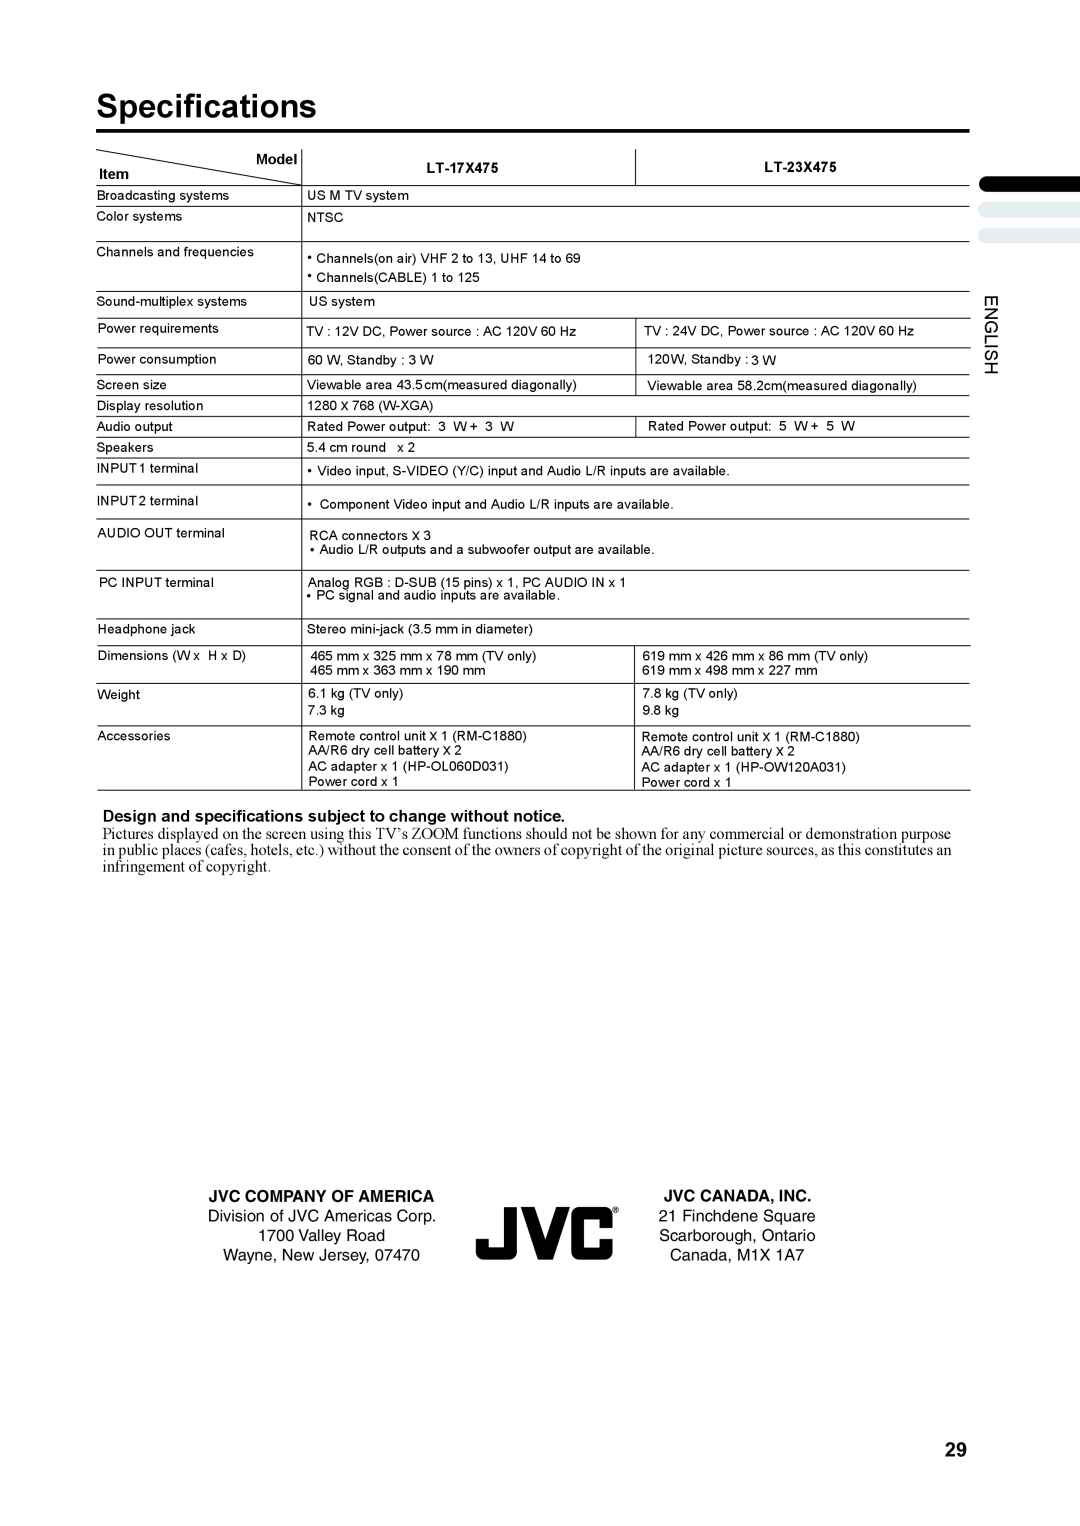 JVC LT-17X475 Specifications, Jvc Company Of America, Jvc Canada, Inc, Canada, M1X 1A7, Model, Finchdene Square, LT-23X475 